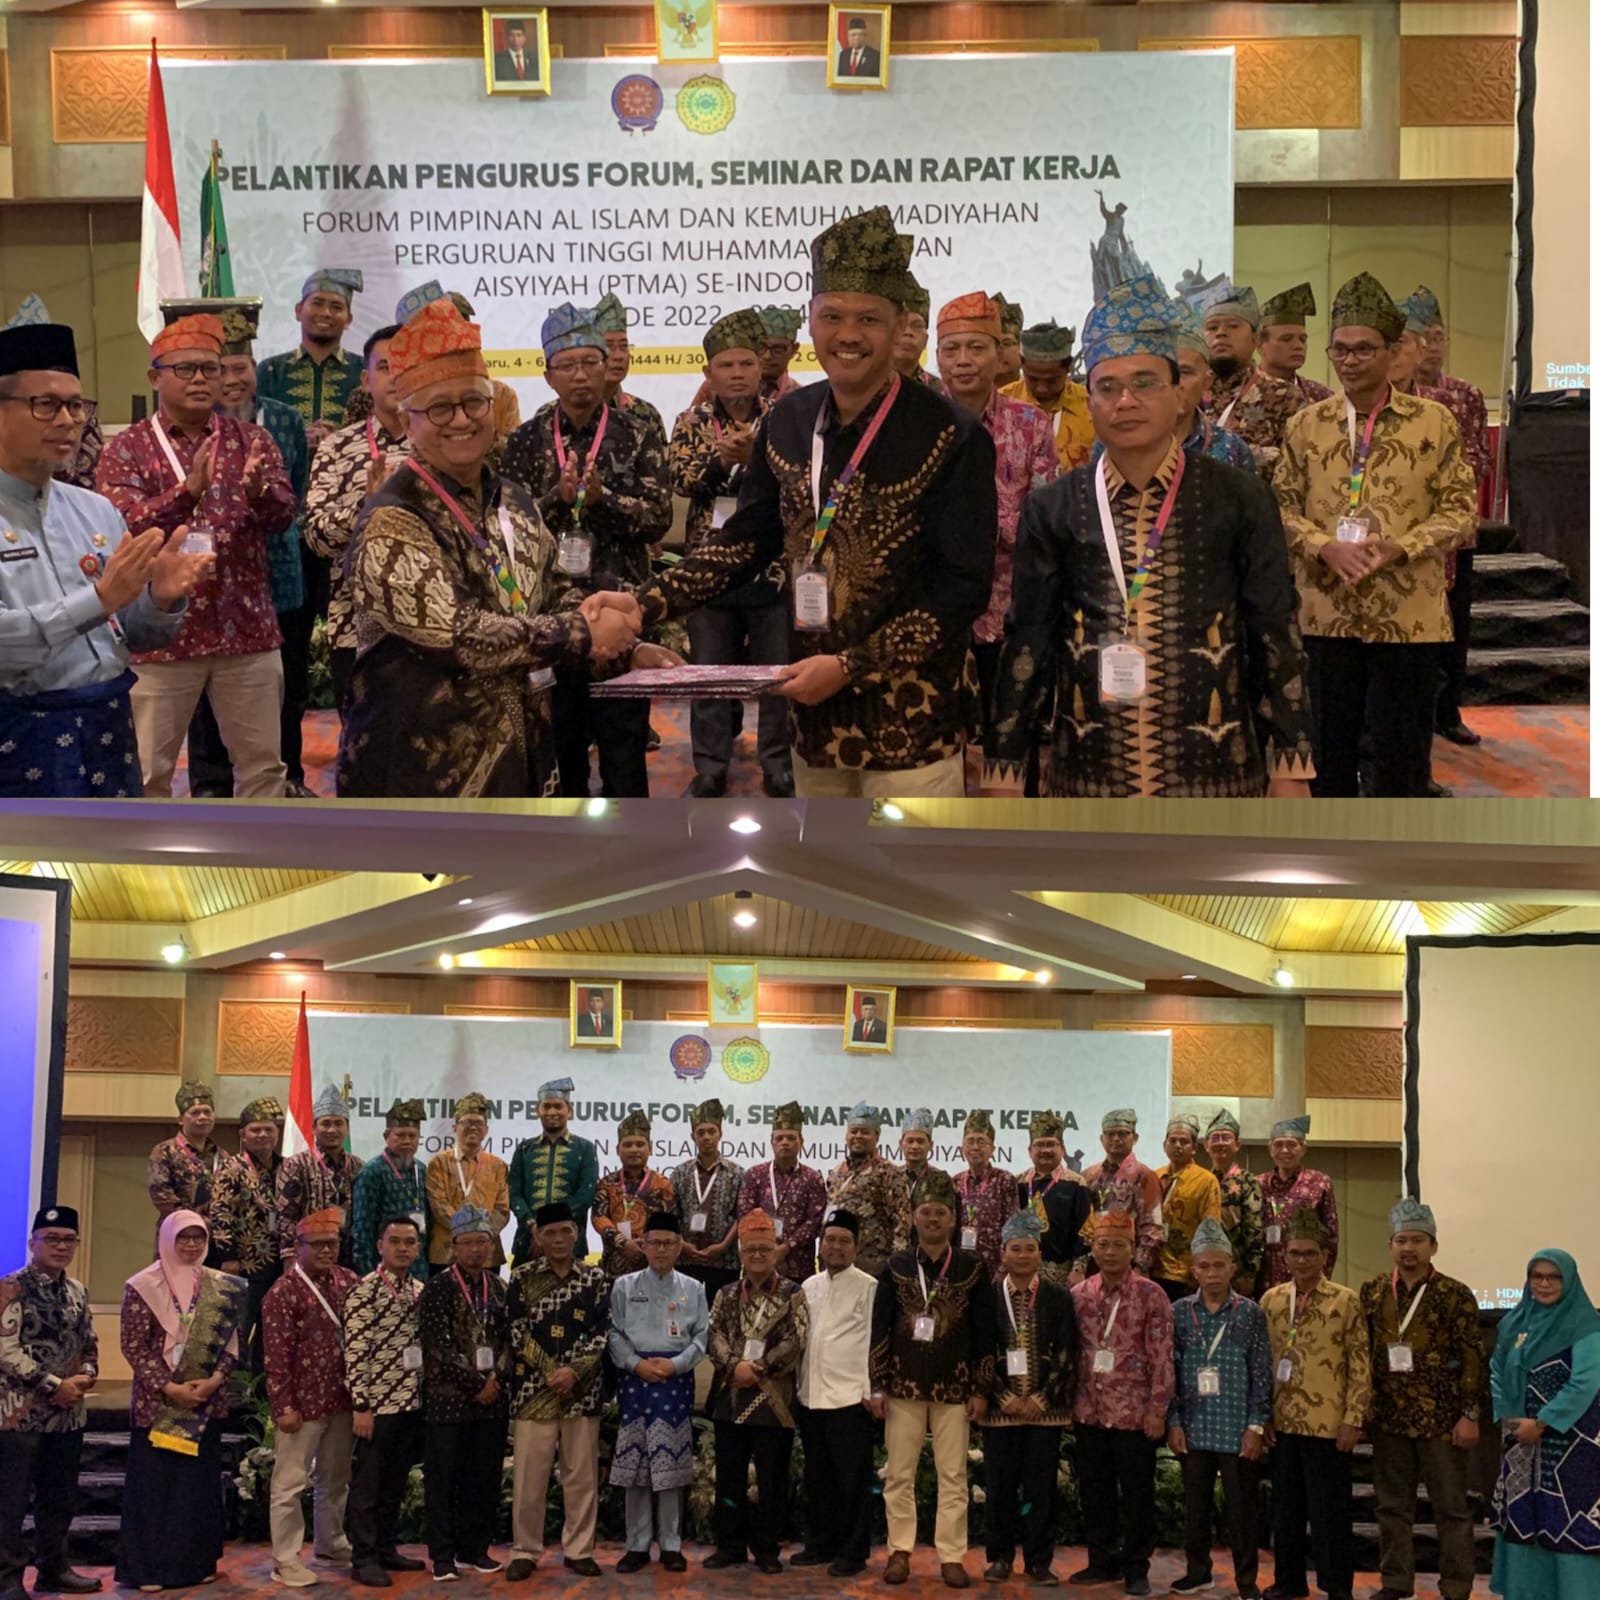 UMRI Tuan Rumah Pelantikan, Seminar dan Rapat Kerja Nasional Forum Pimpinan AIK PTMA Se-Indonesia